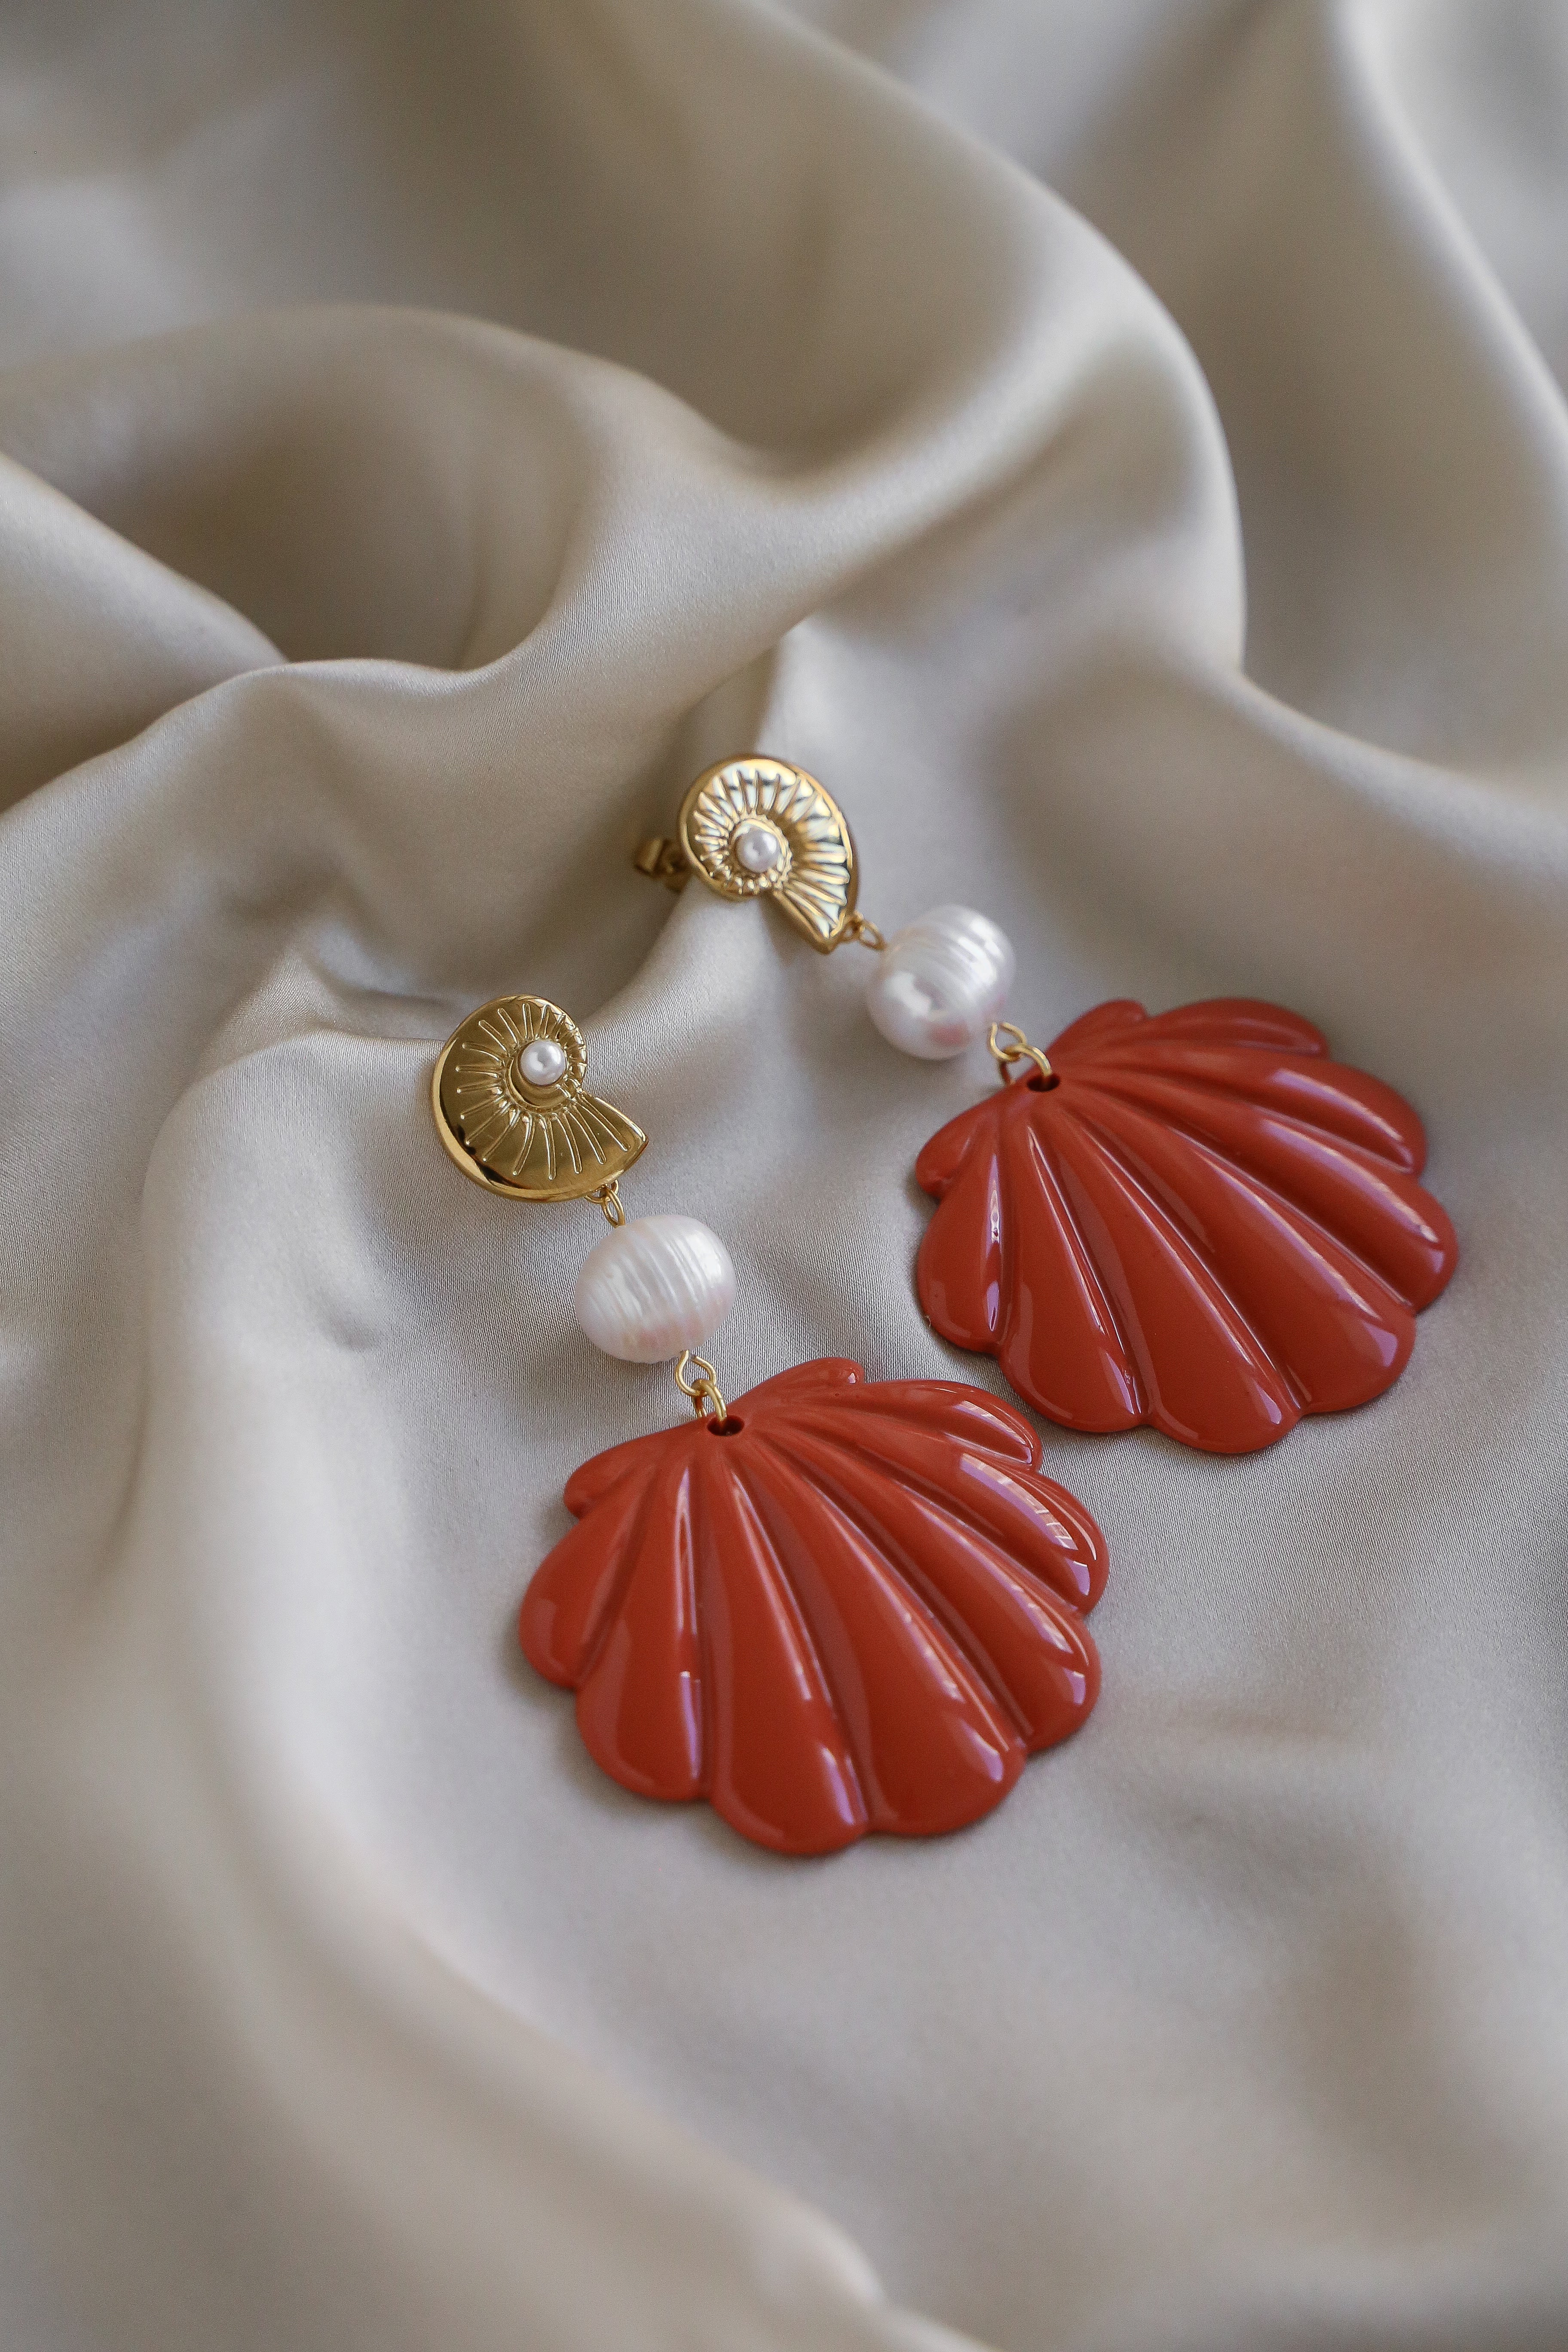 Melodie Earrings - Boutique Minimaliste has waterproof, durable, elegant and vintage inspired jewelry